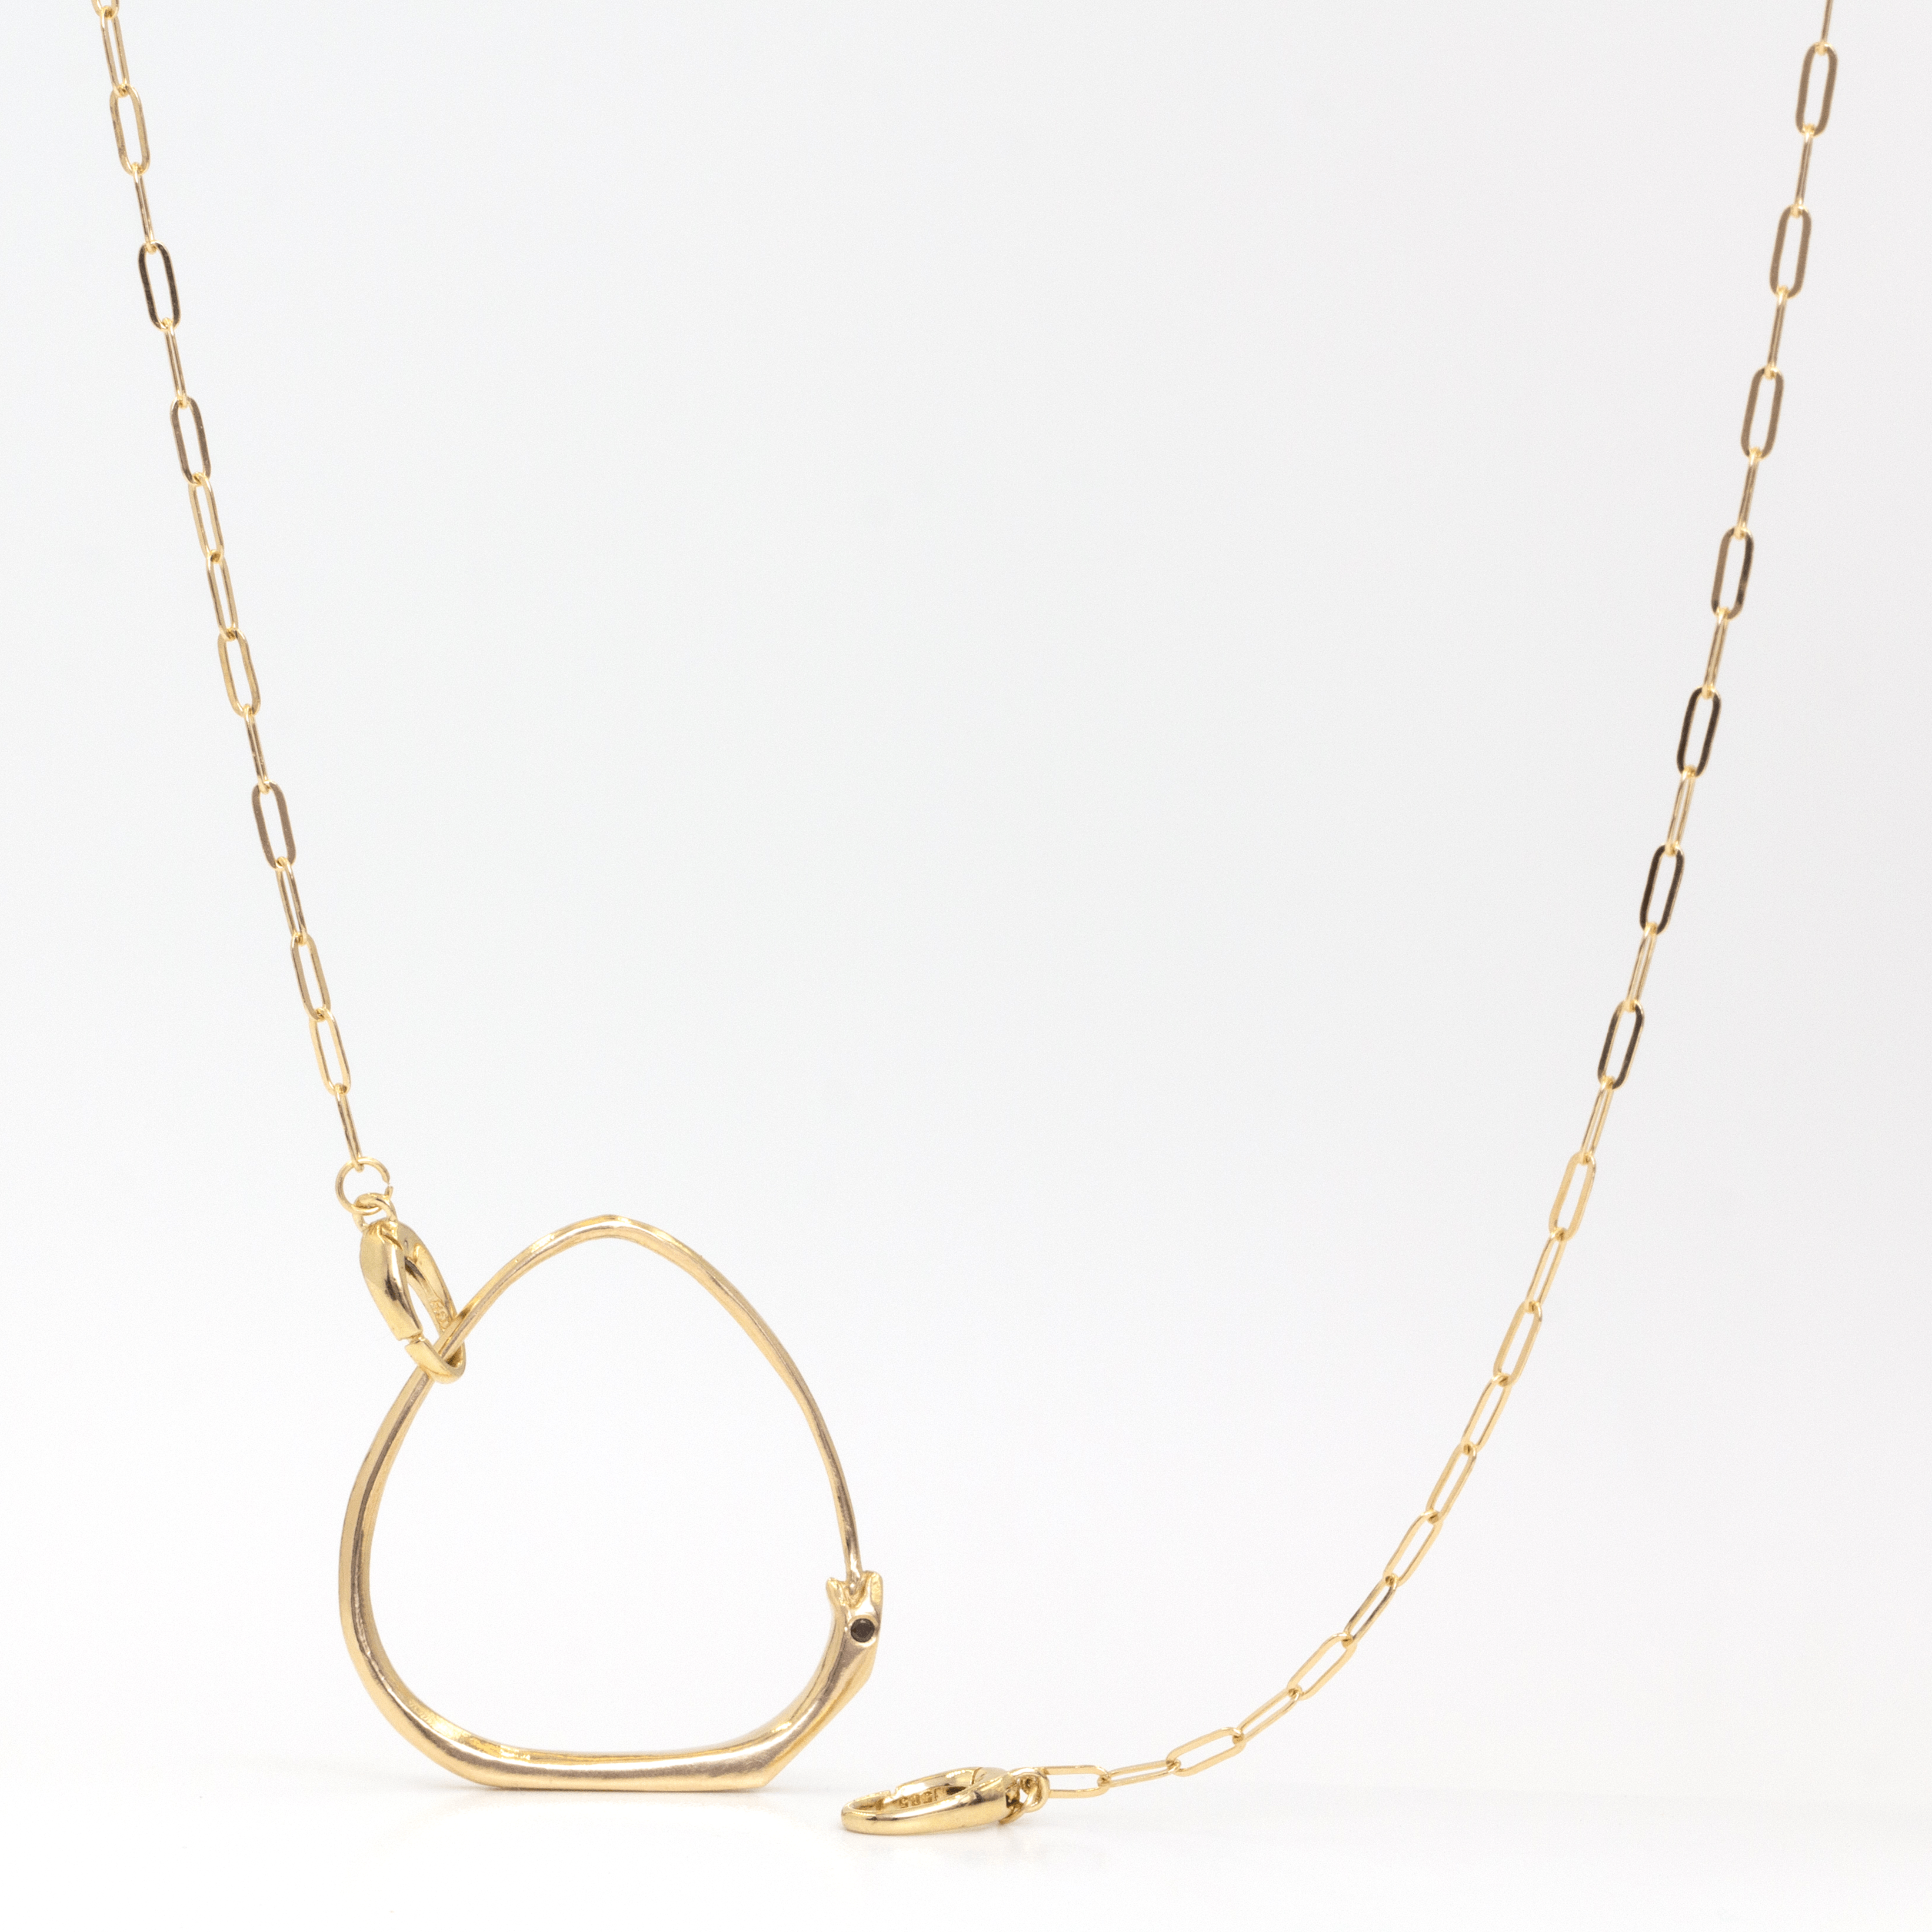 Fine Ouroboros Edit ouroboros pendant 14k yellow gold / black diamonds / 16 inch chain The Cosmic Ouroboros Necklace